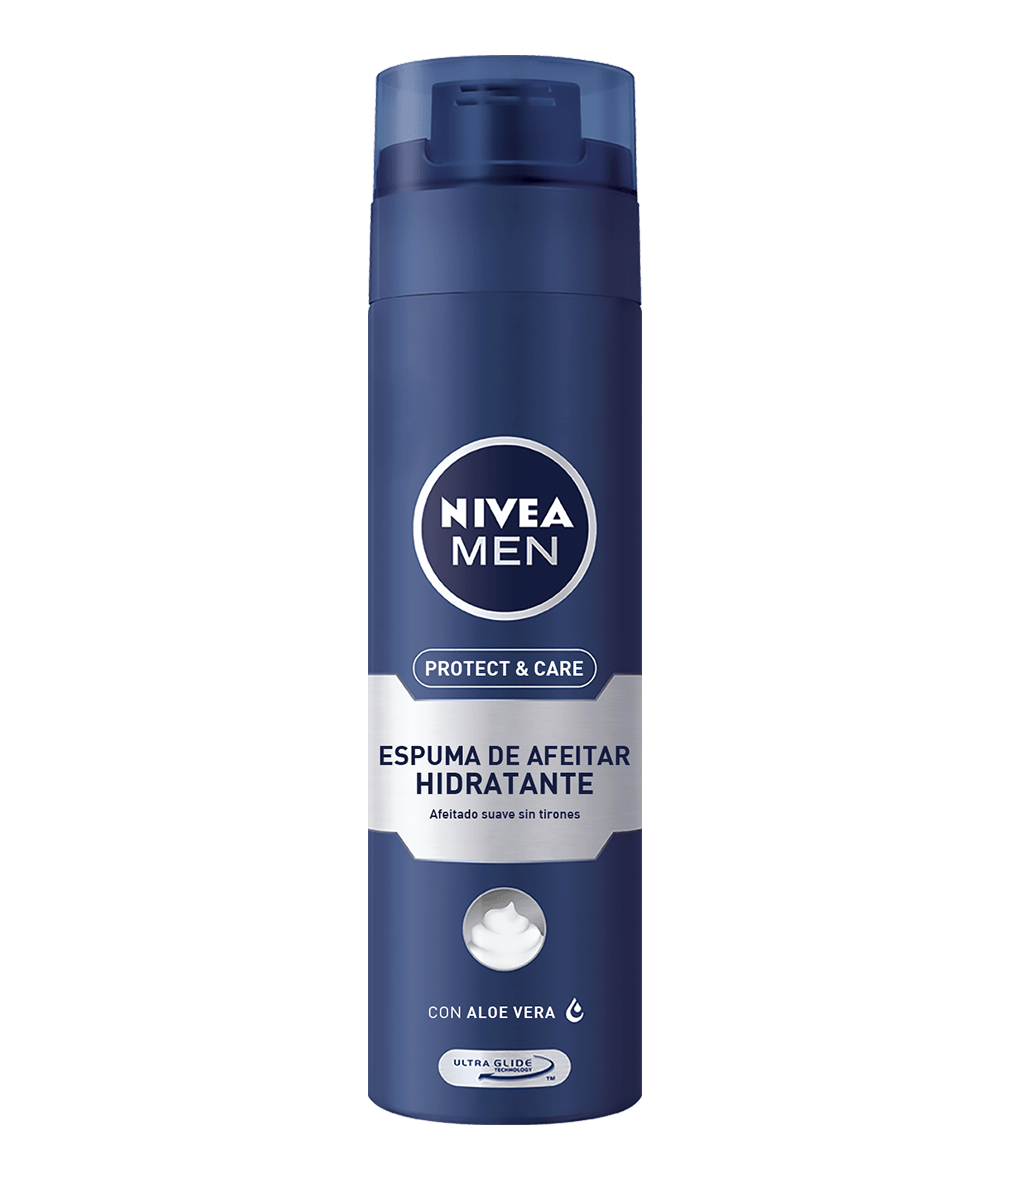 NIVEA Men Espuma De Afeitar Hidratante Protect & Care - Cuidado Masculino